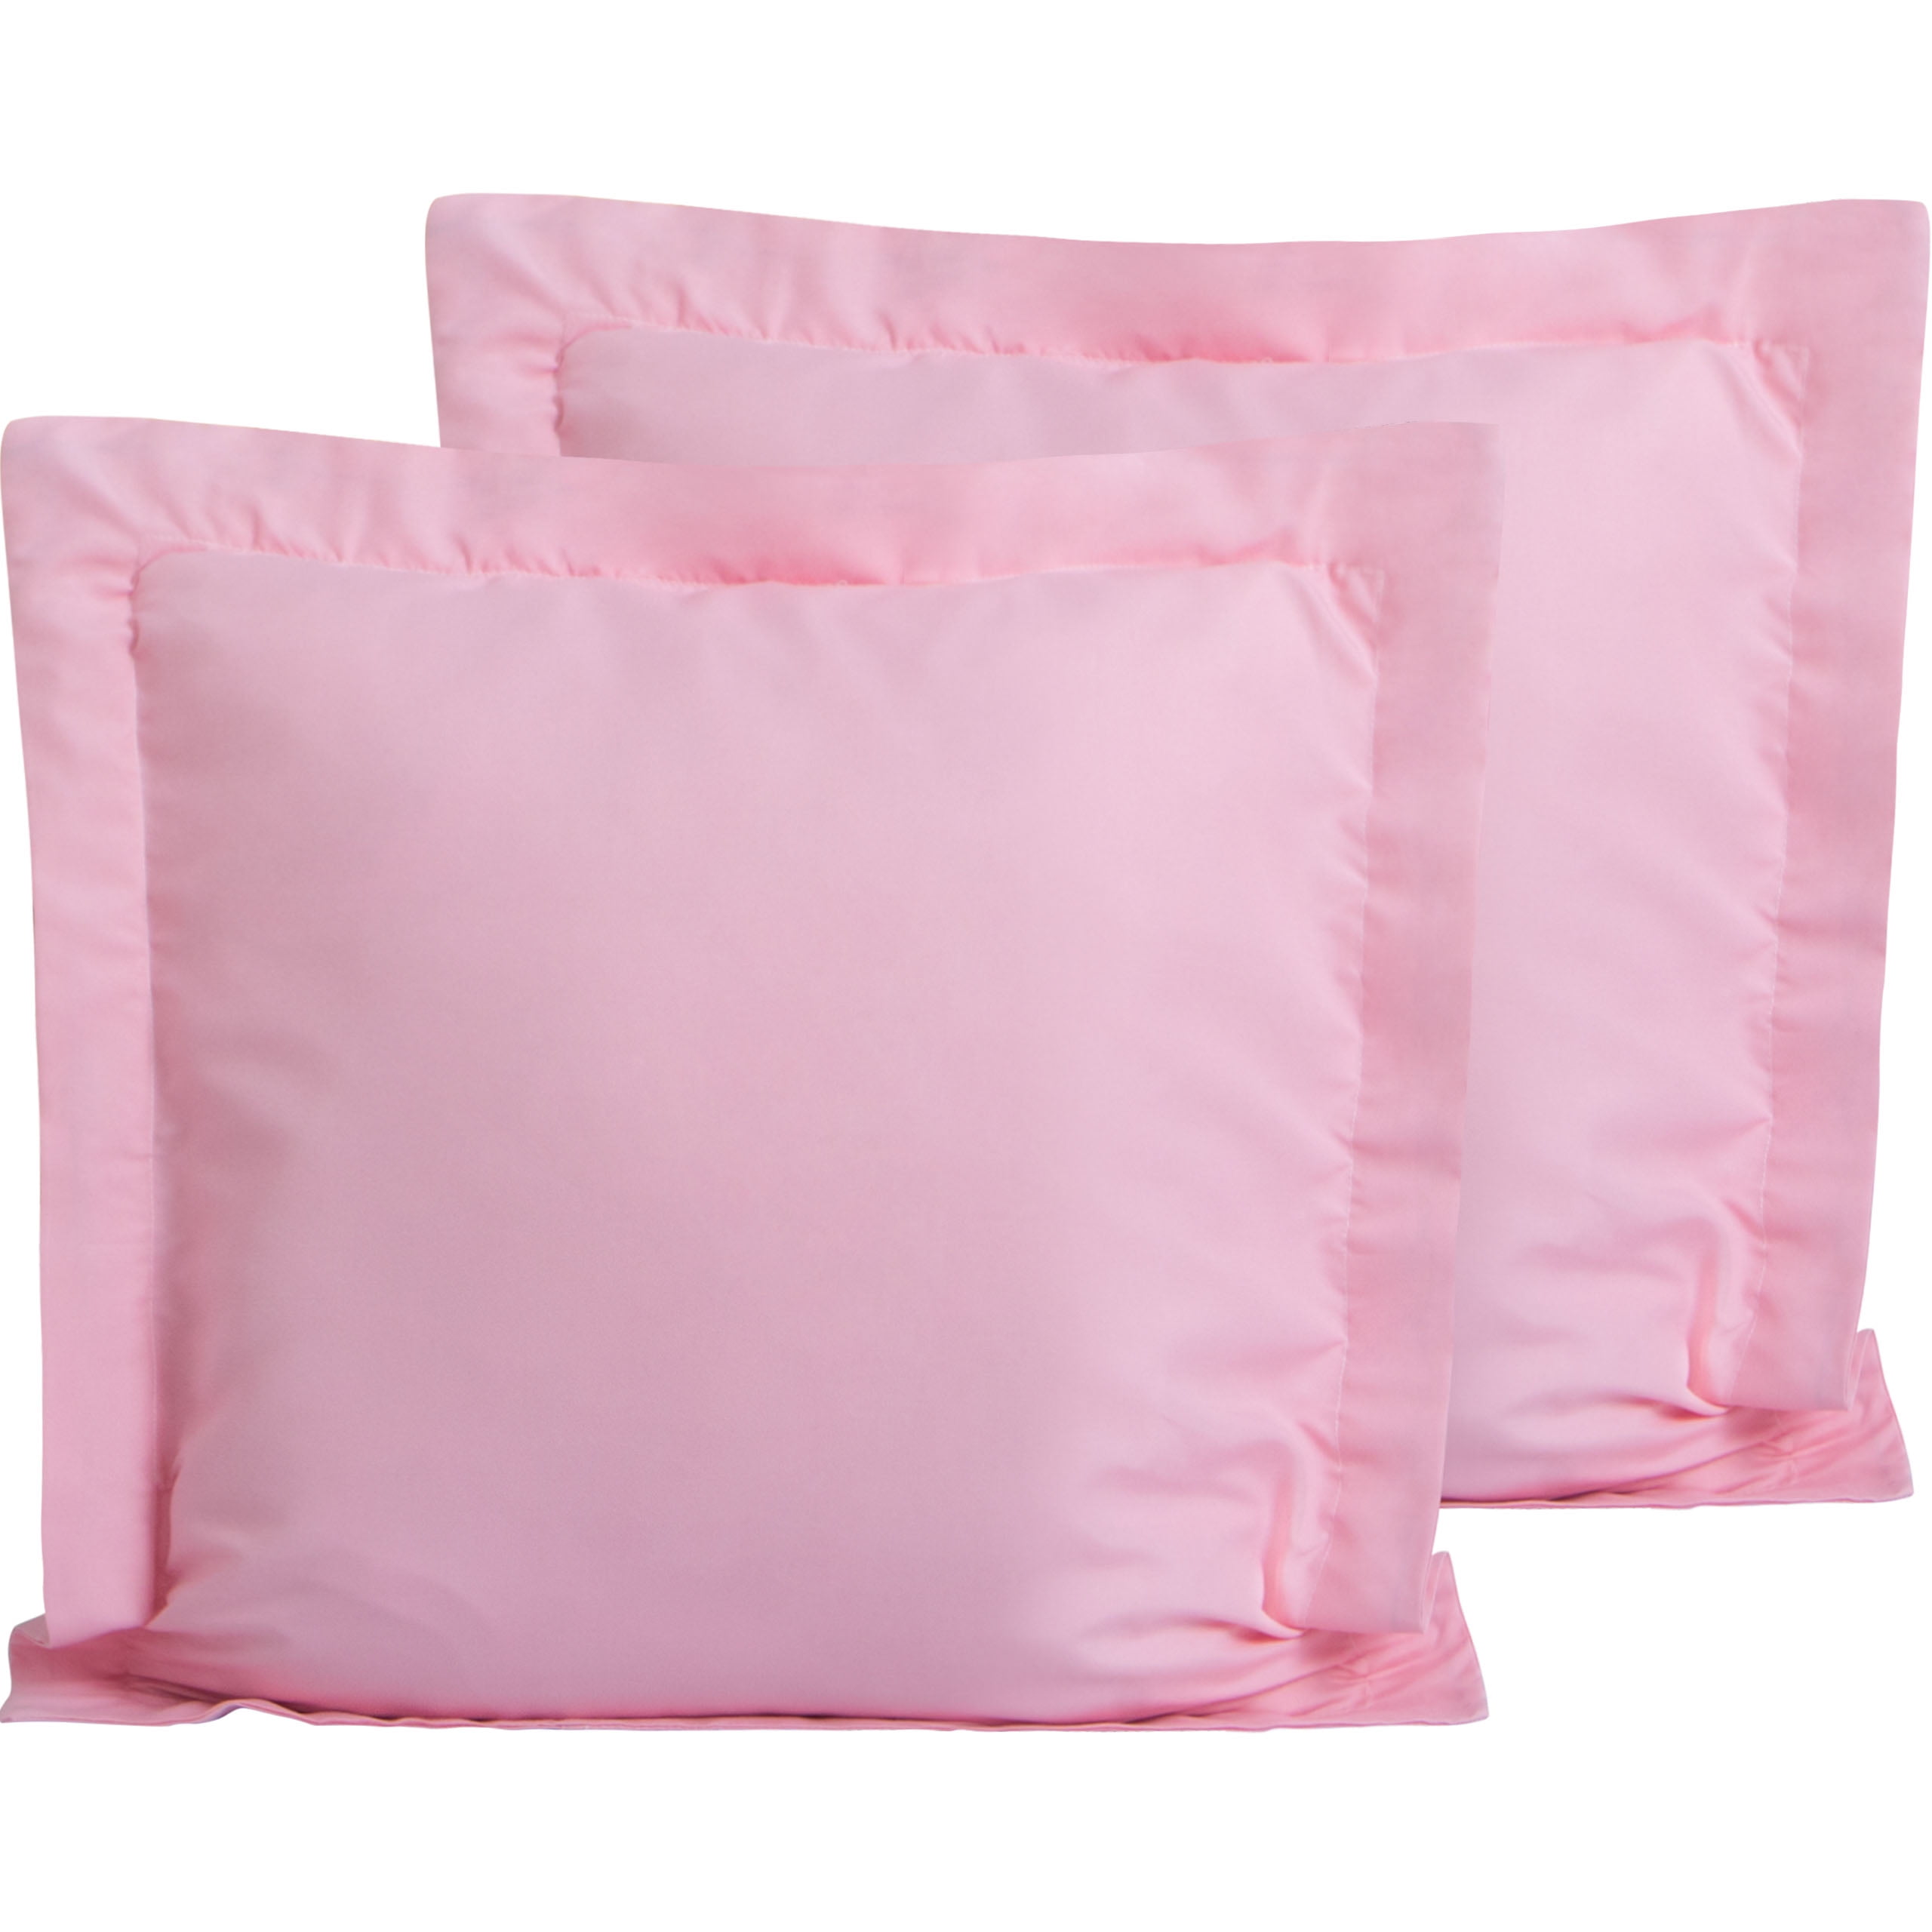 Navy Blue, Euro Ultra Soft and Premium Quality FLXXIE 2 Pack Microfiber European Pillow Shams 26 x 26 